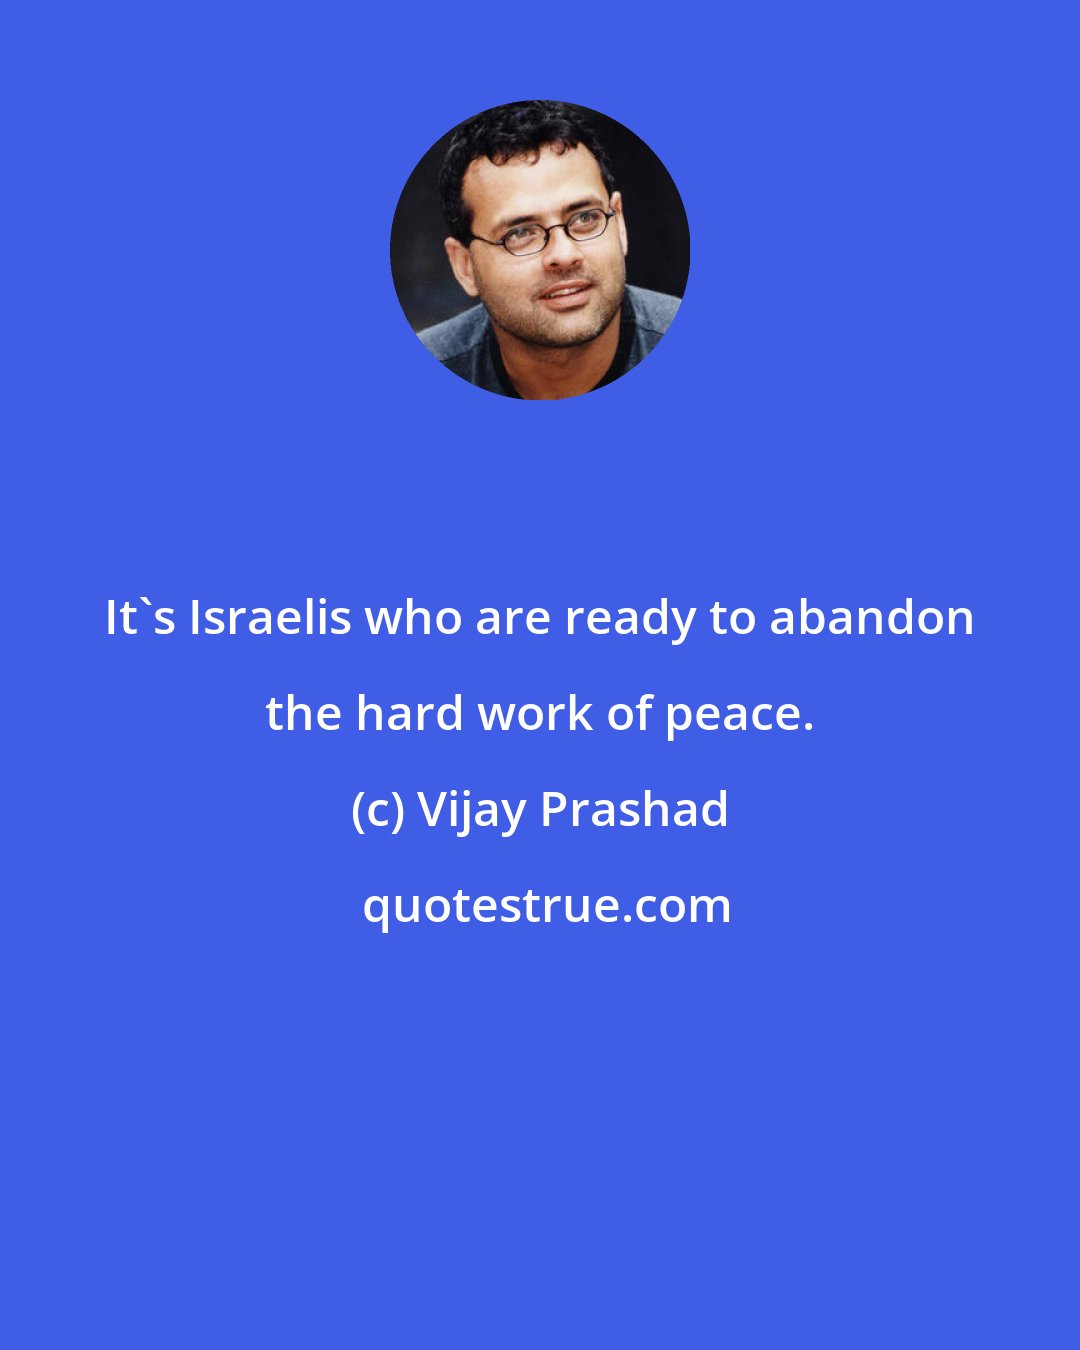 Vijay Prashad: It's Israelis who are ready to abandon the hard work of peace.